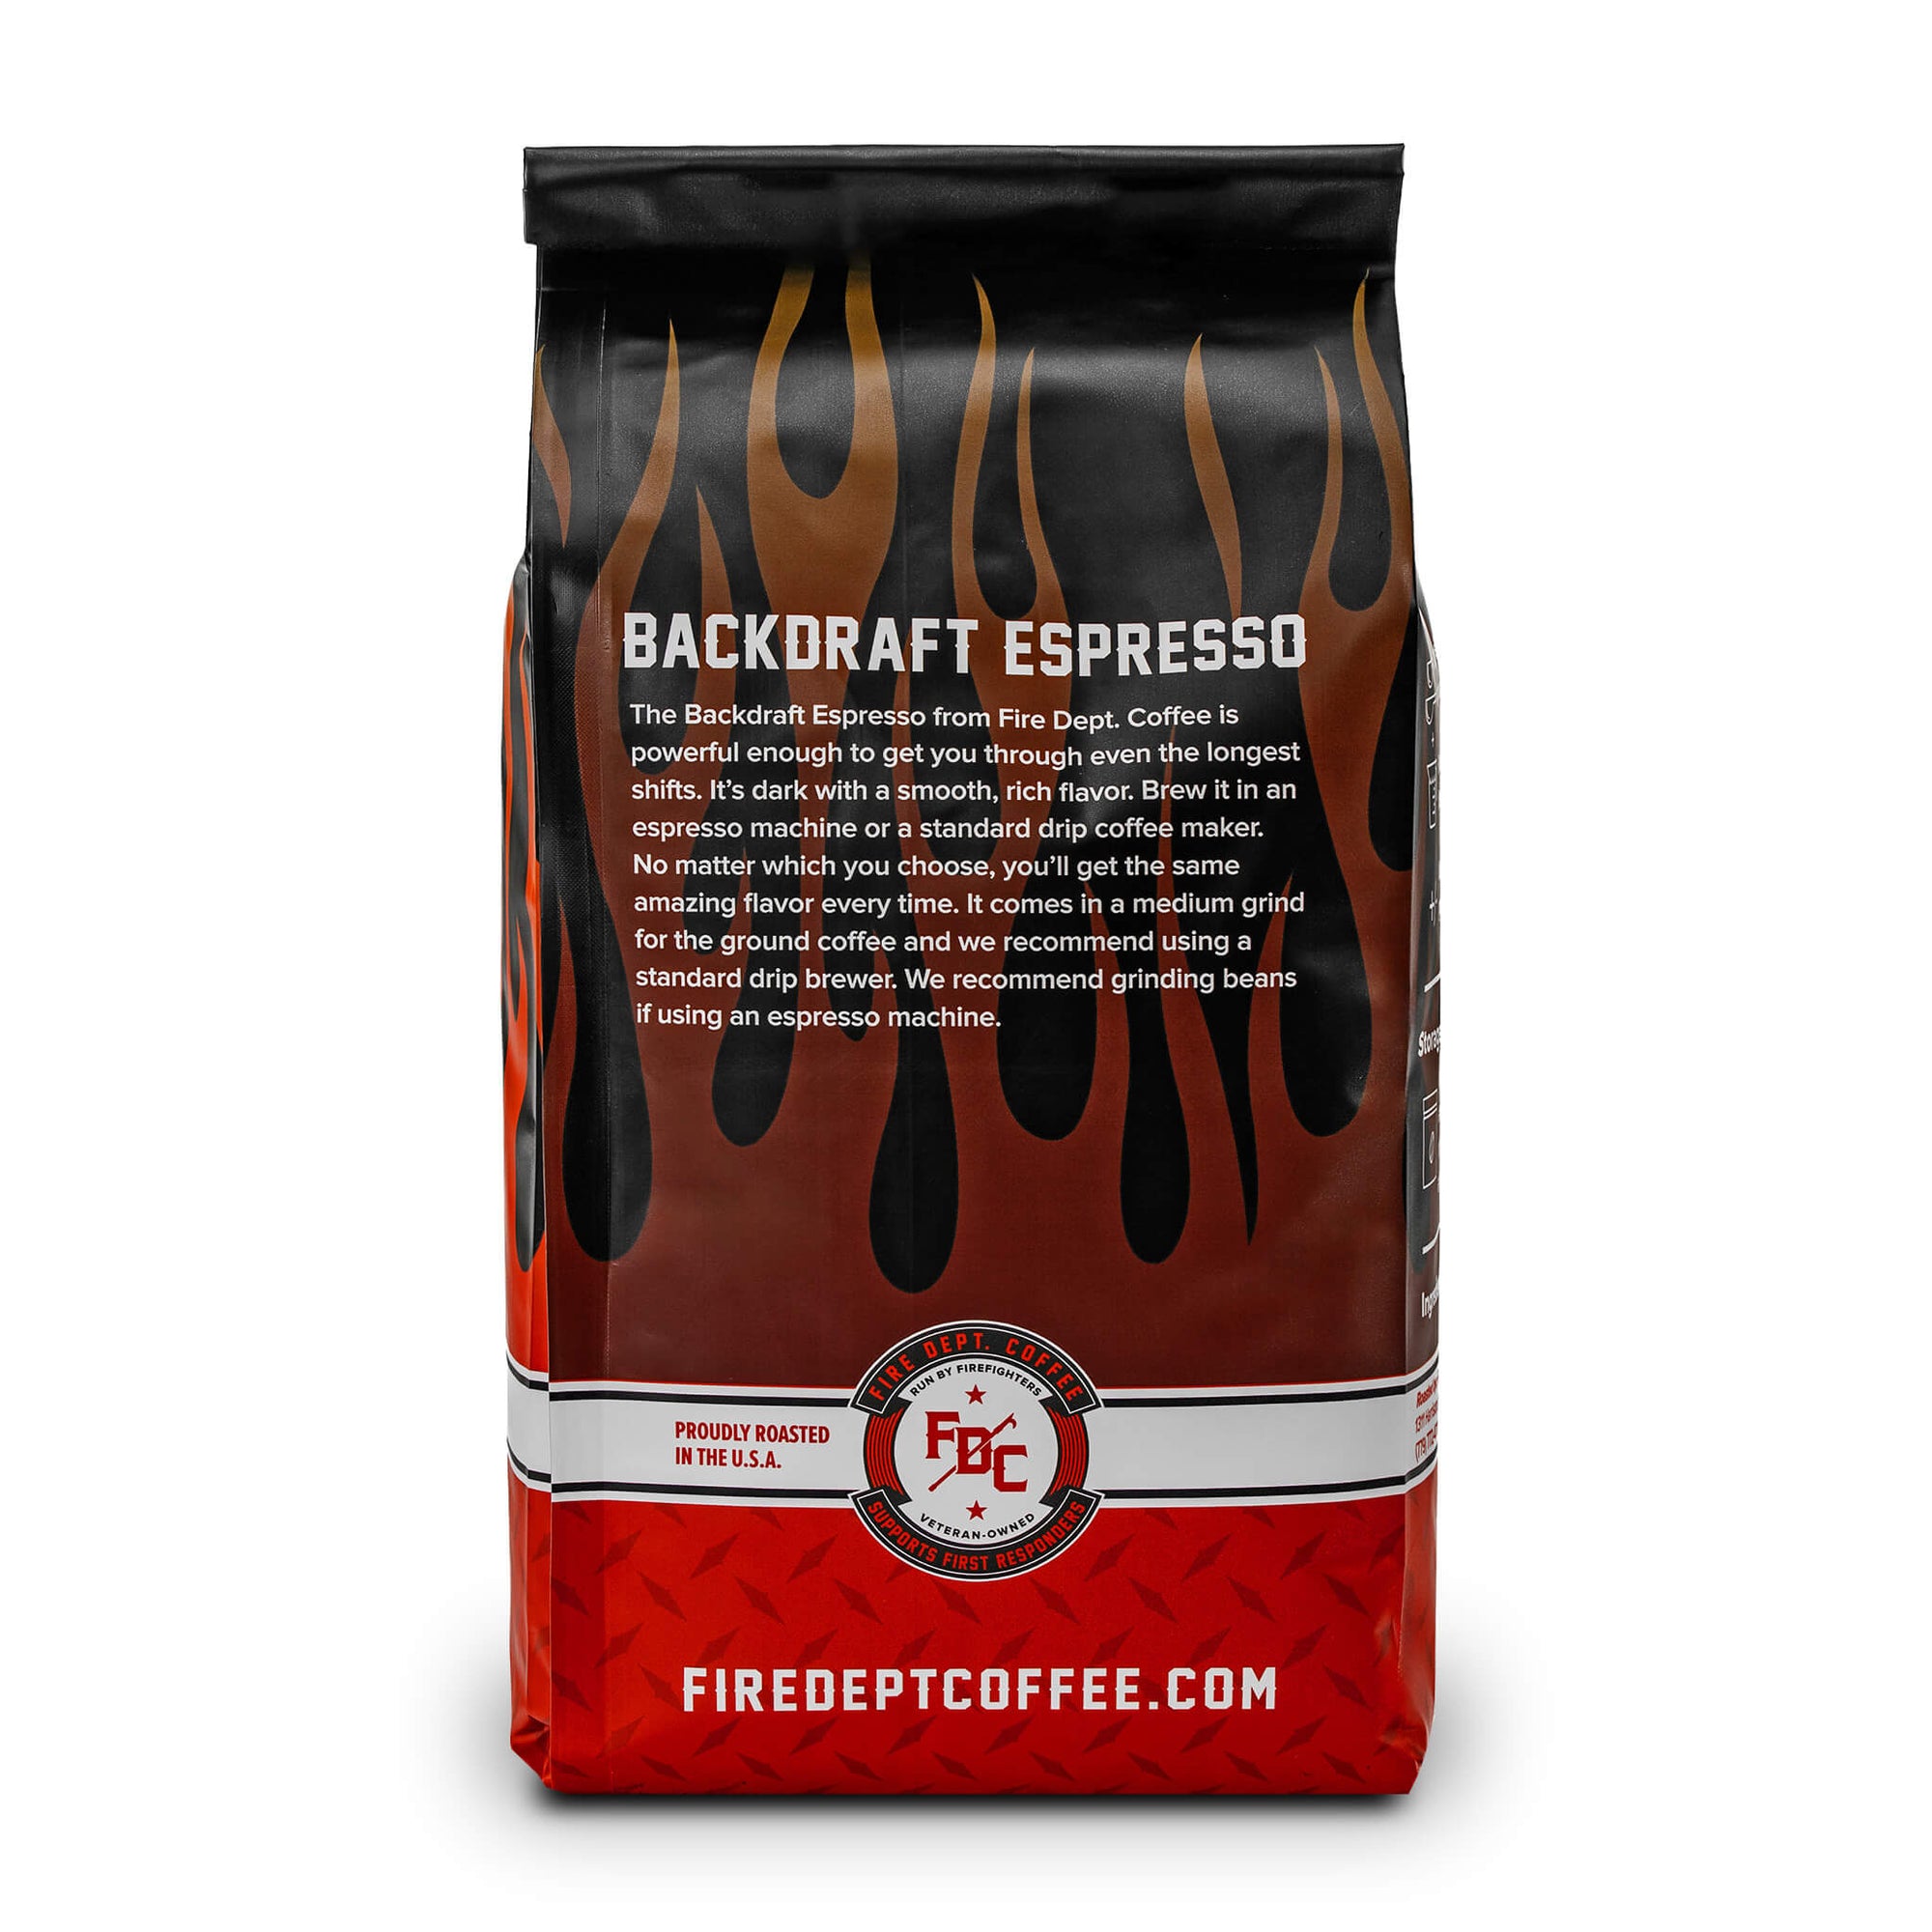 BACKDRAFT ESPRESSO COFFEE